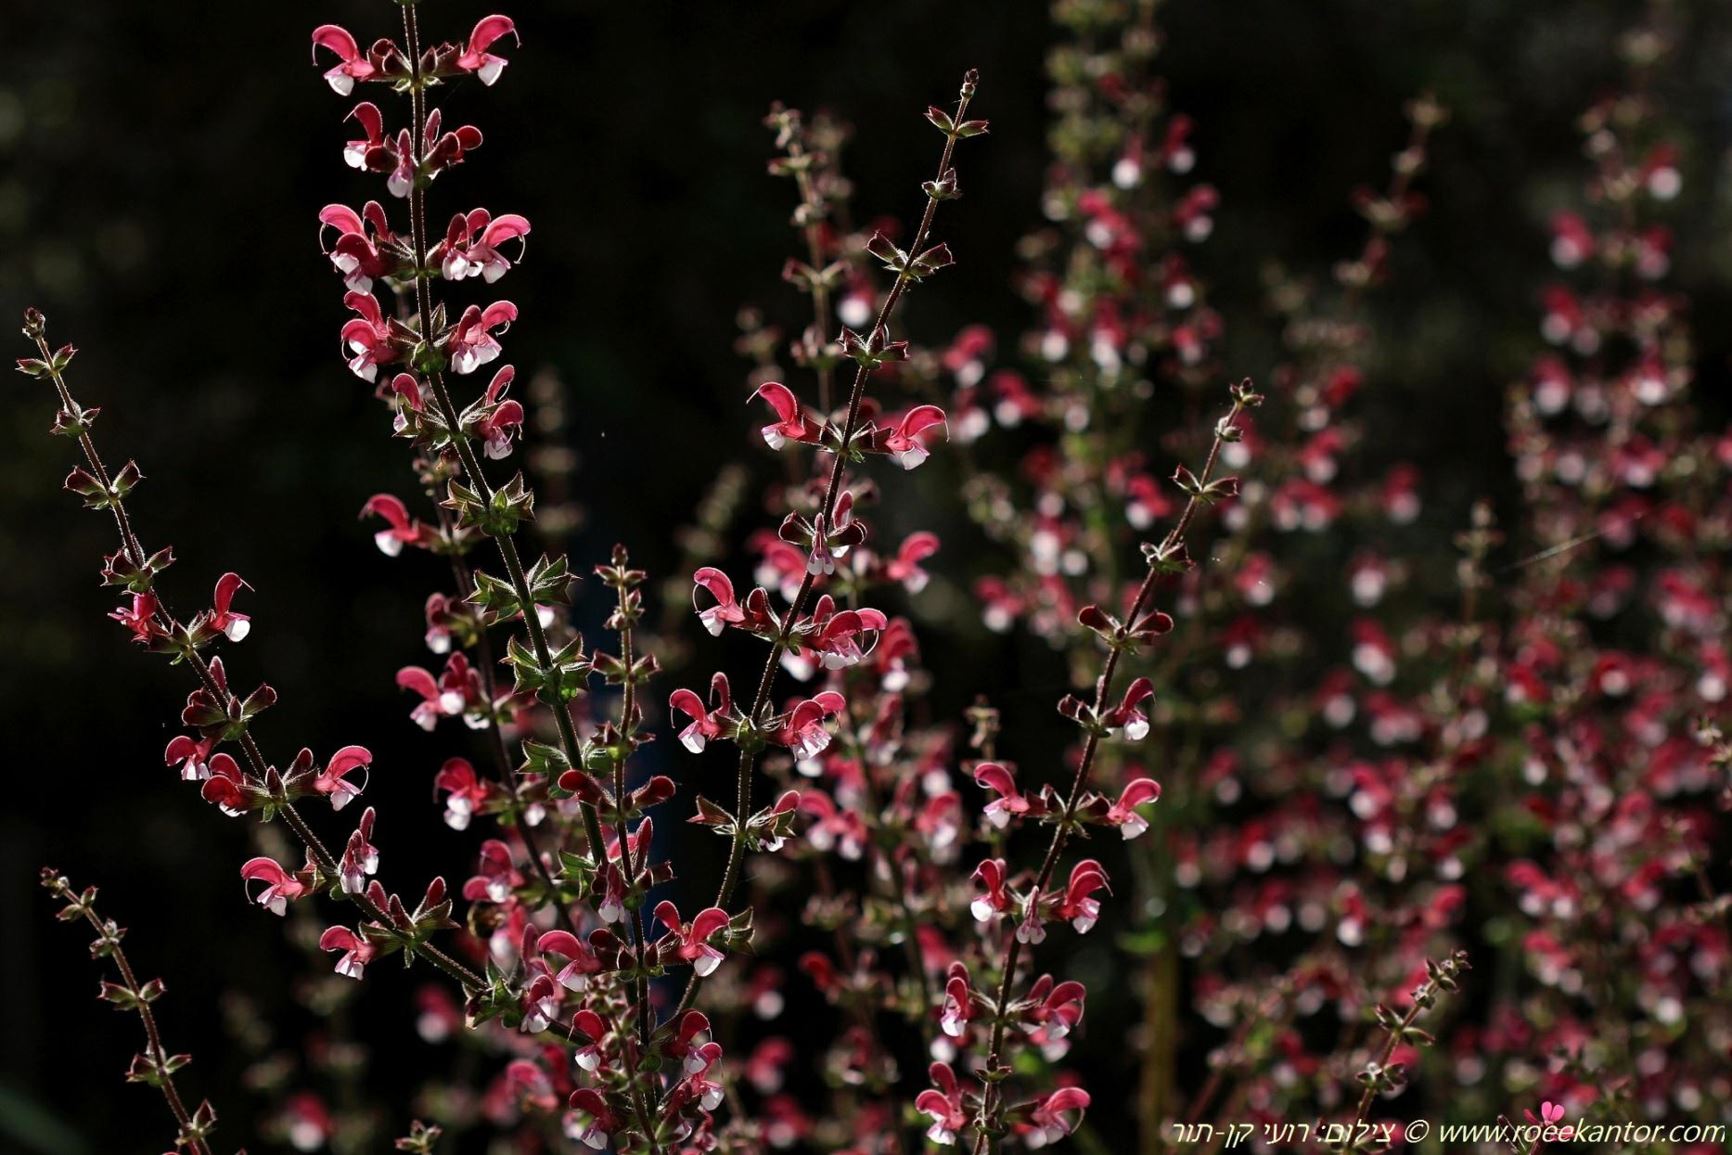 Salvia hierosolymitana var. hierosolymitana - Many-stemmed Sage, מרוות ירושלים זן-טיפוסי, מרוות ירושלים זן-טיפוסי